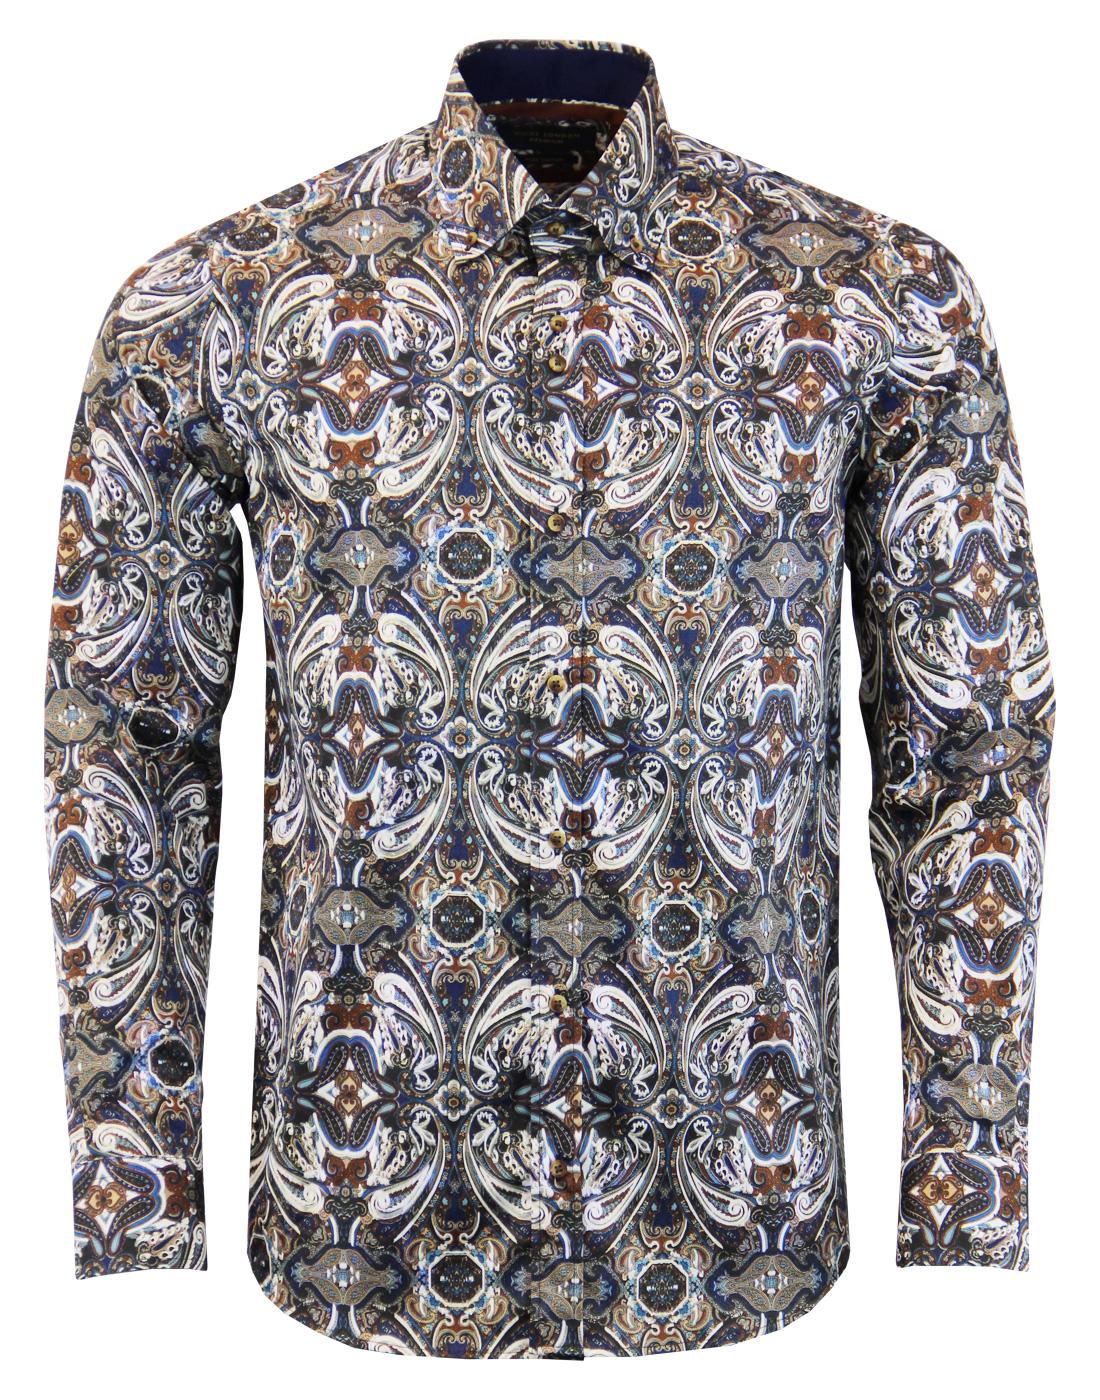 GUIDE LONDON Men's 60s Mod Ornate Paisley Shirt